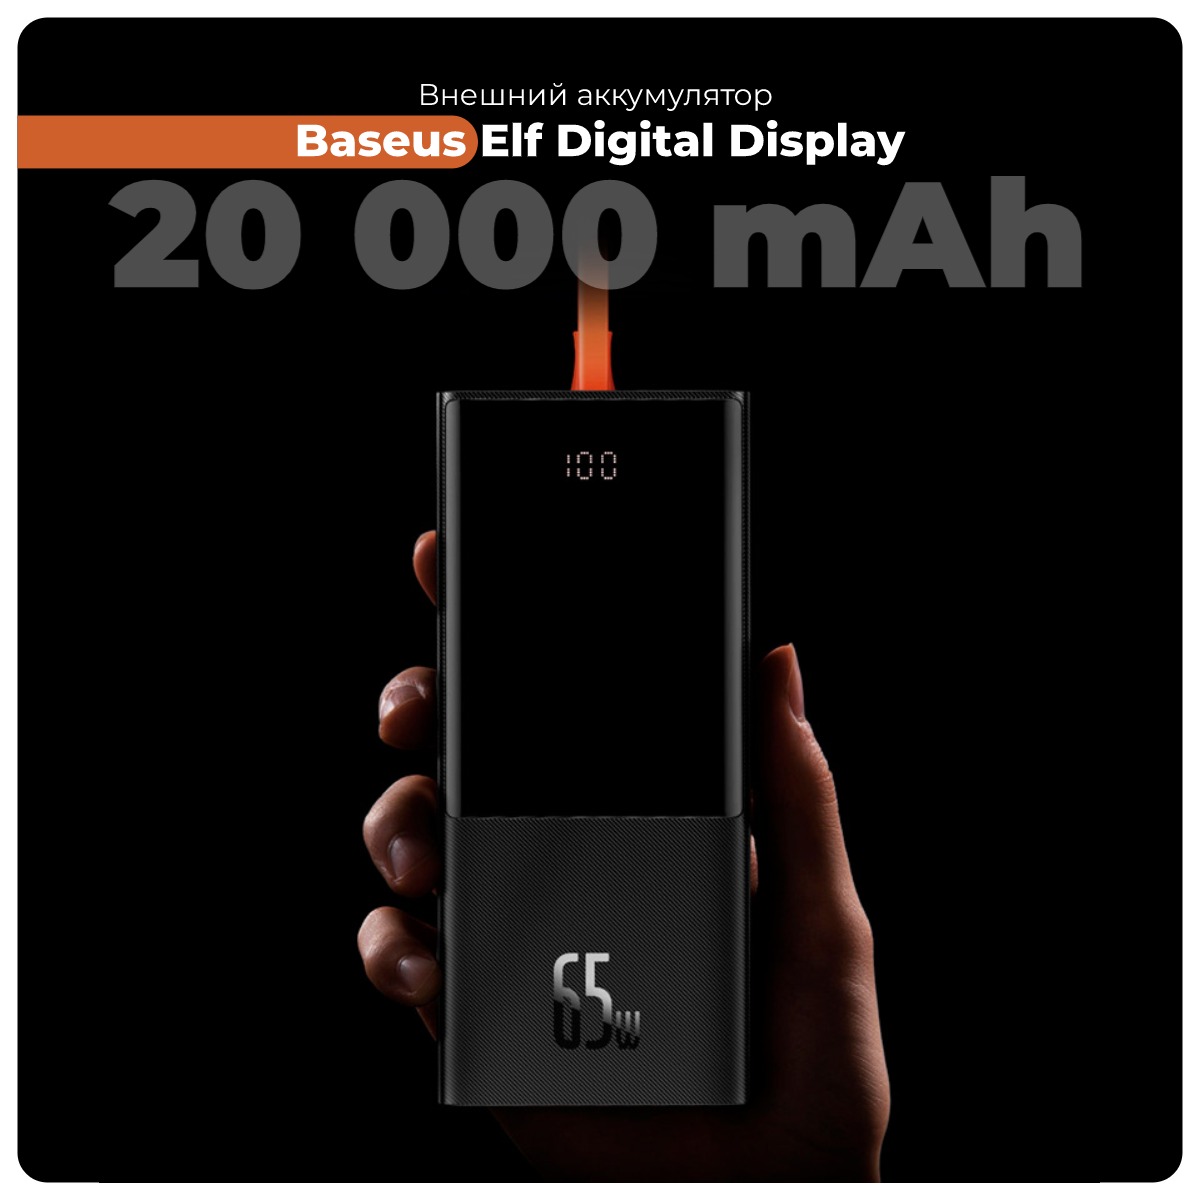 Baseus-Elf-Digital-Display-Fast-Charging-Power-Bank-PPJL000001-01